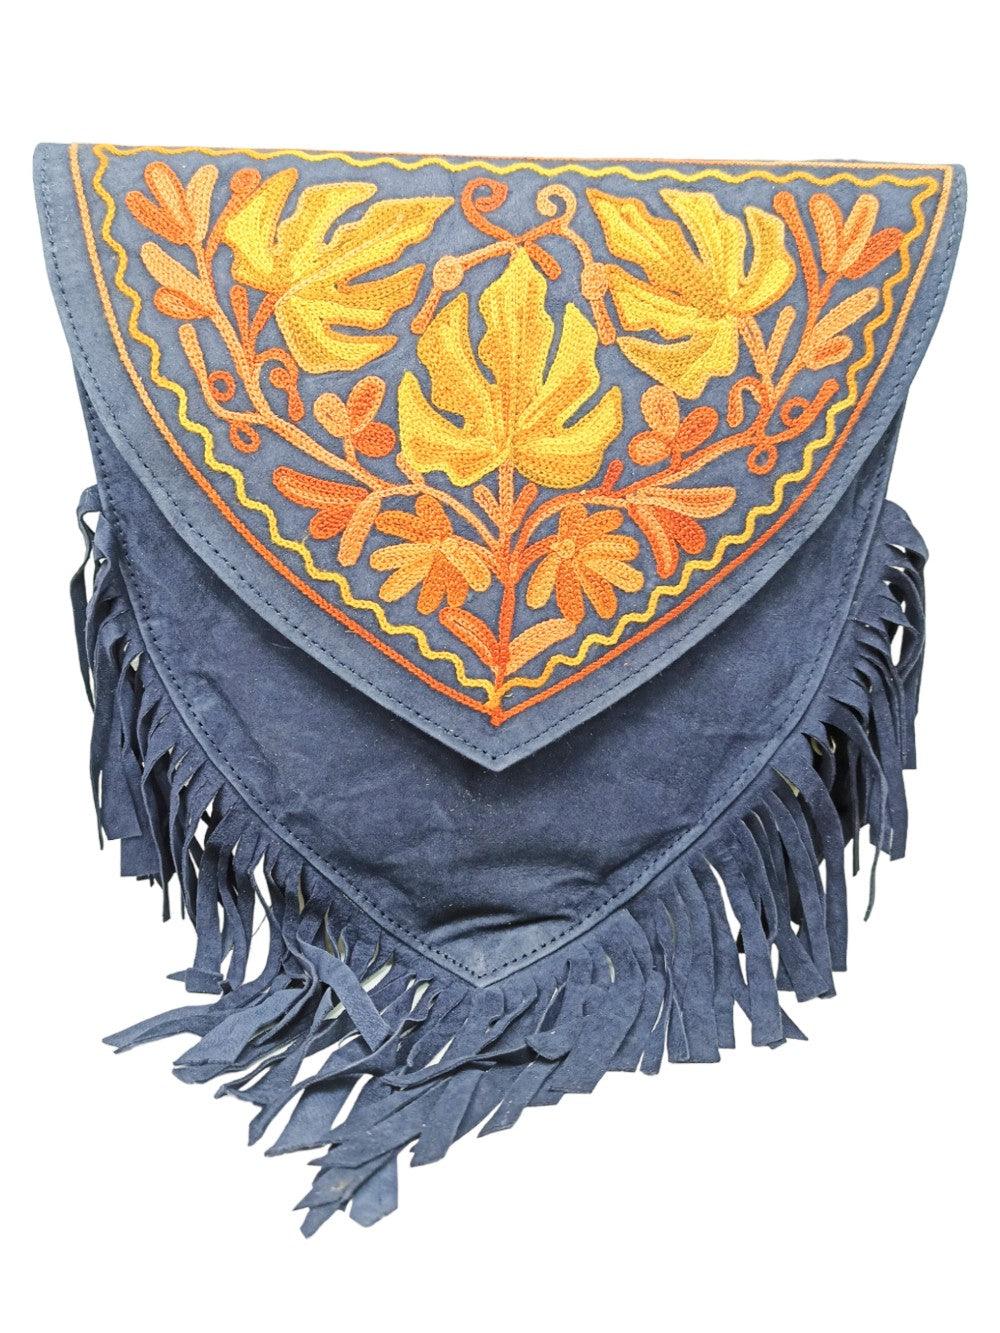 Suede Leather Heart Bag | Embroidery Heart Bag | Sling Bag For Girls - ZANSKAR ARTS